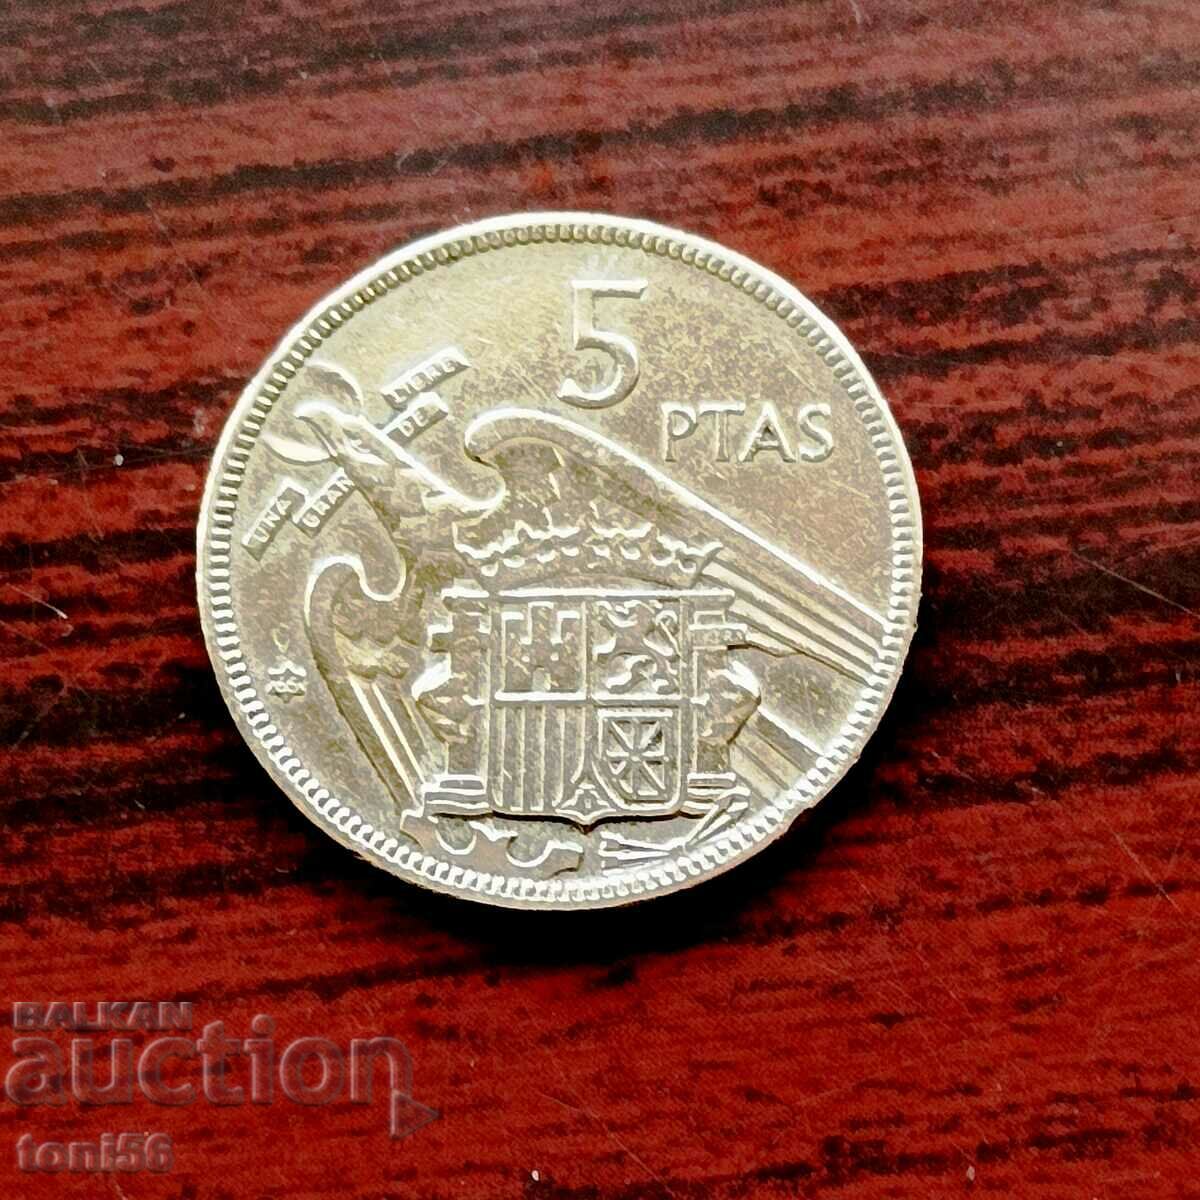 Spain 5 pesetas 1957/65 - Franco